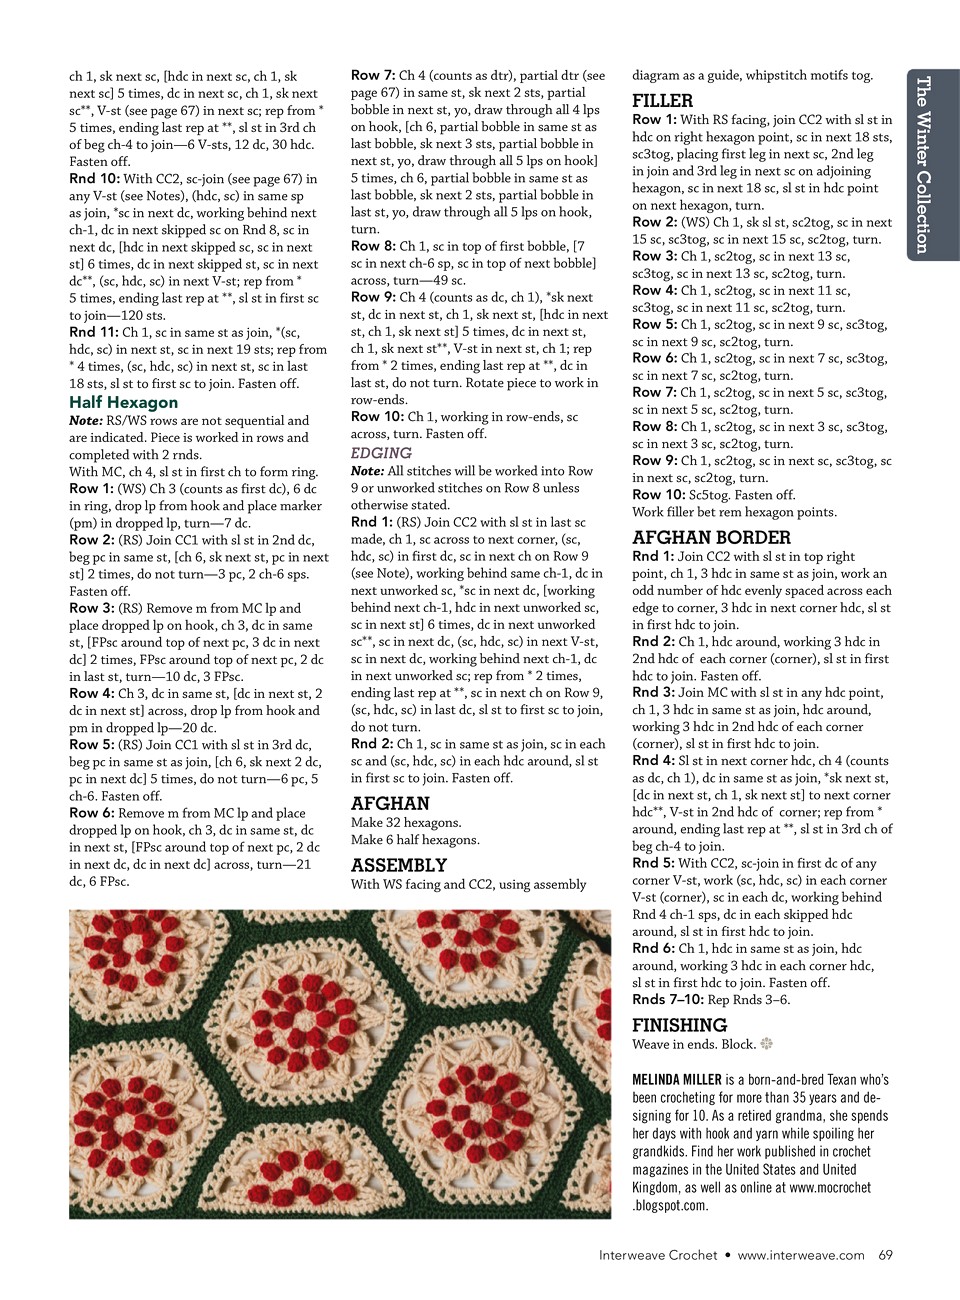 Interweave Crochet Winter 2019-70